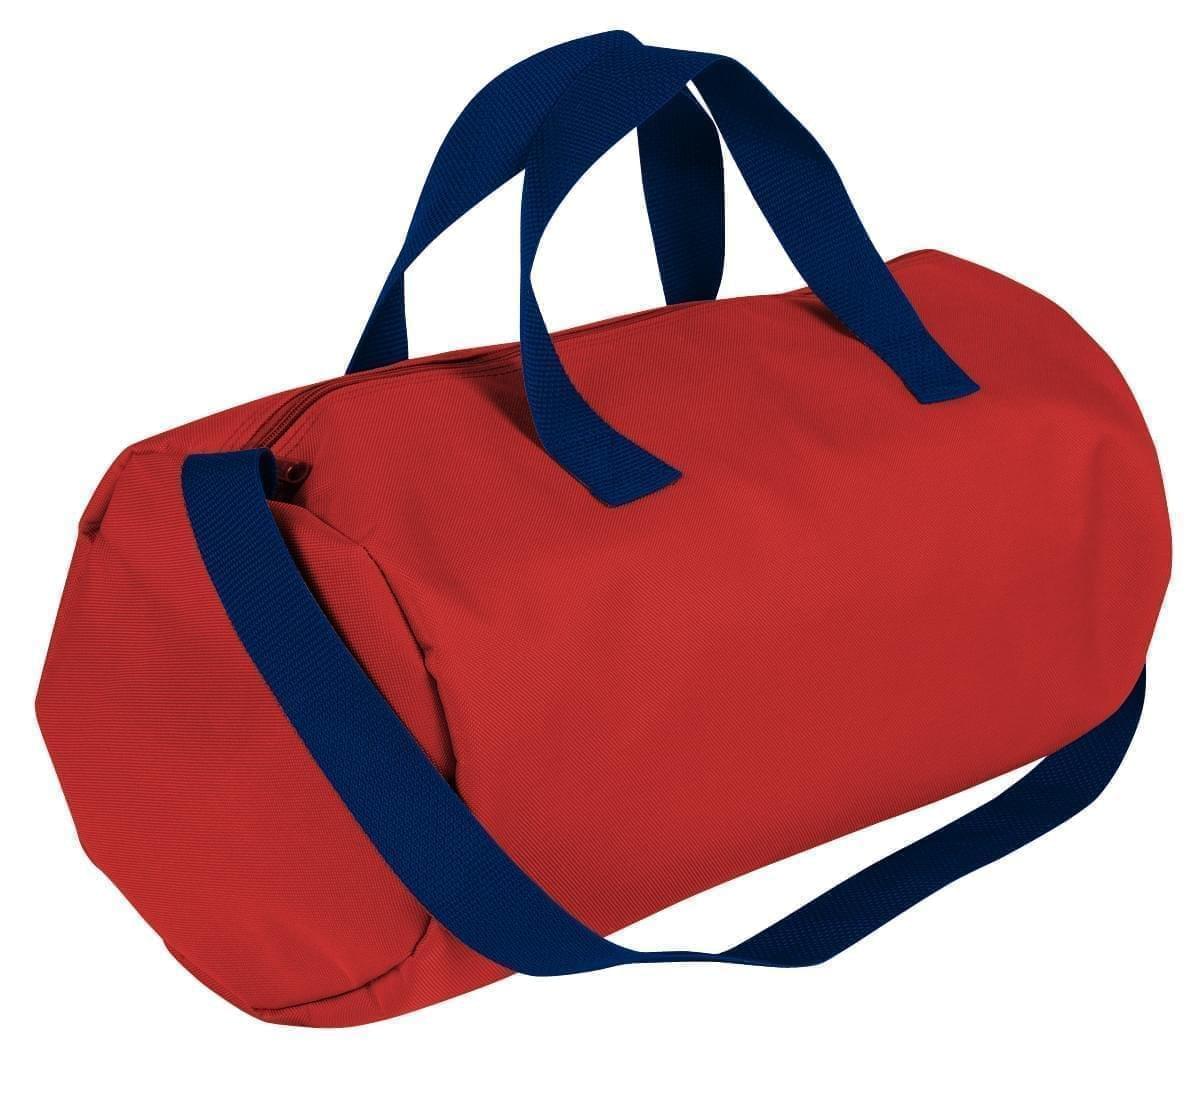 USA Made Nylon Poly Gym Roll Bags, ROCX31-600